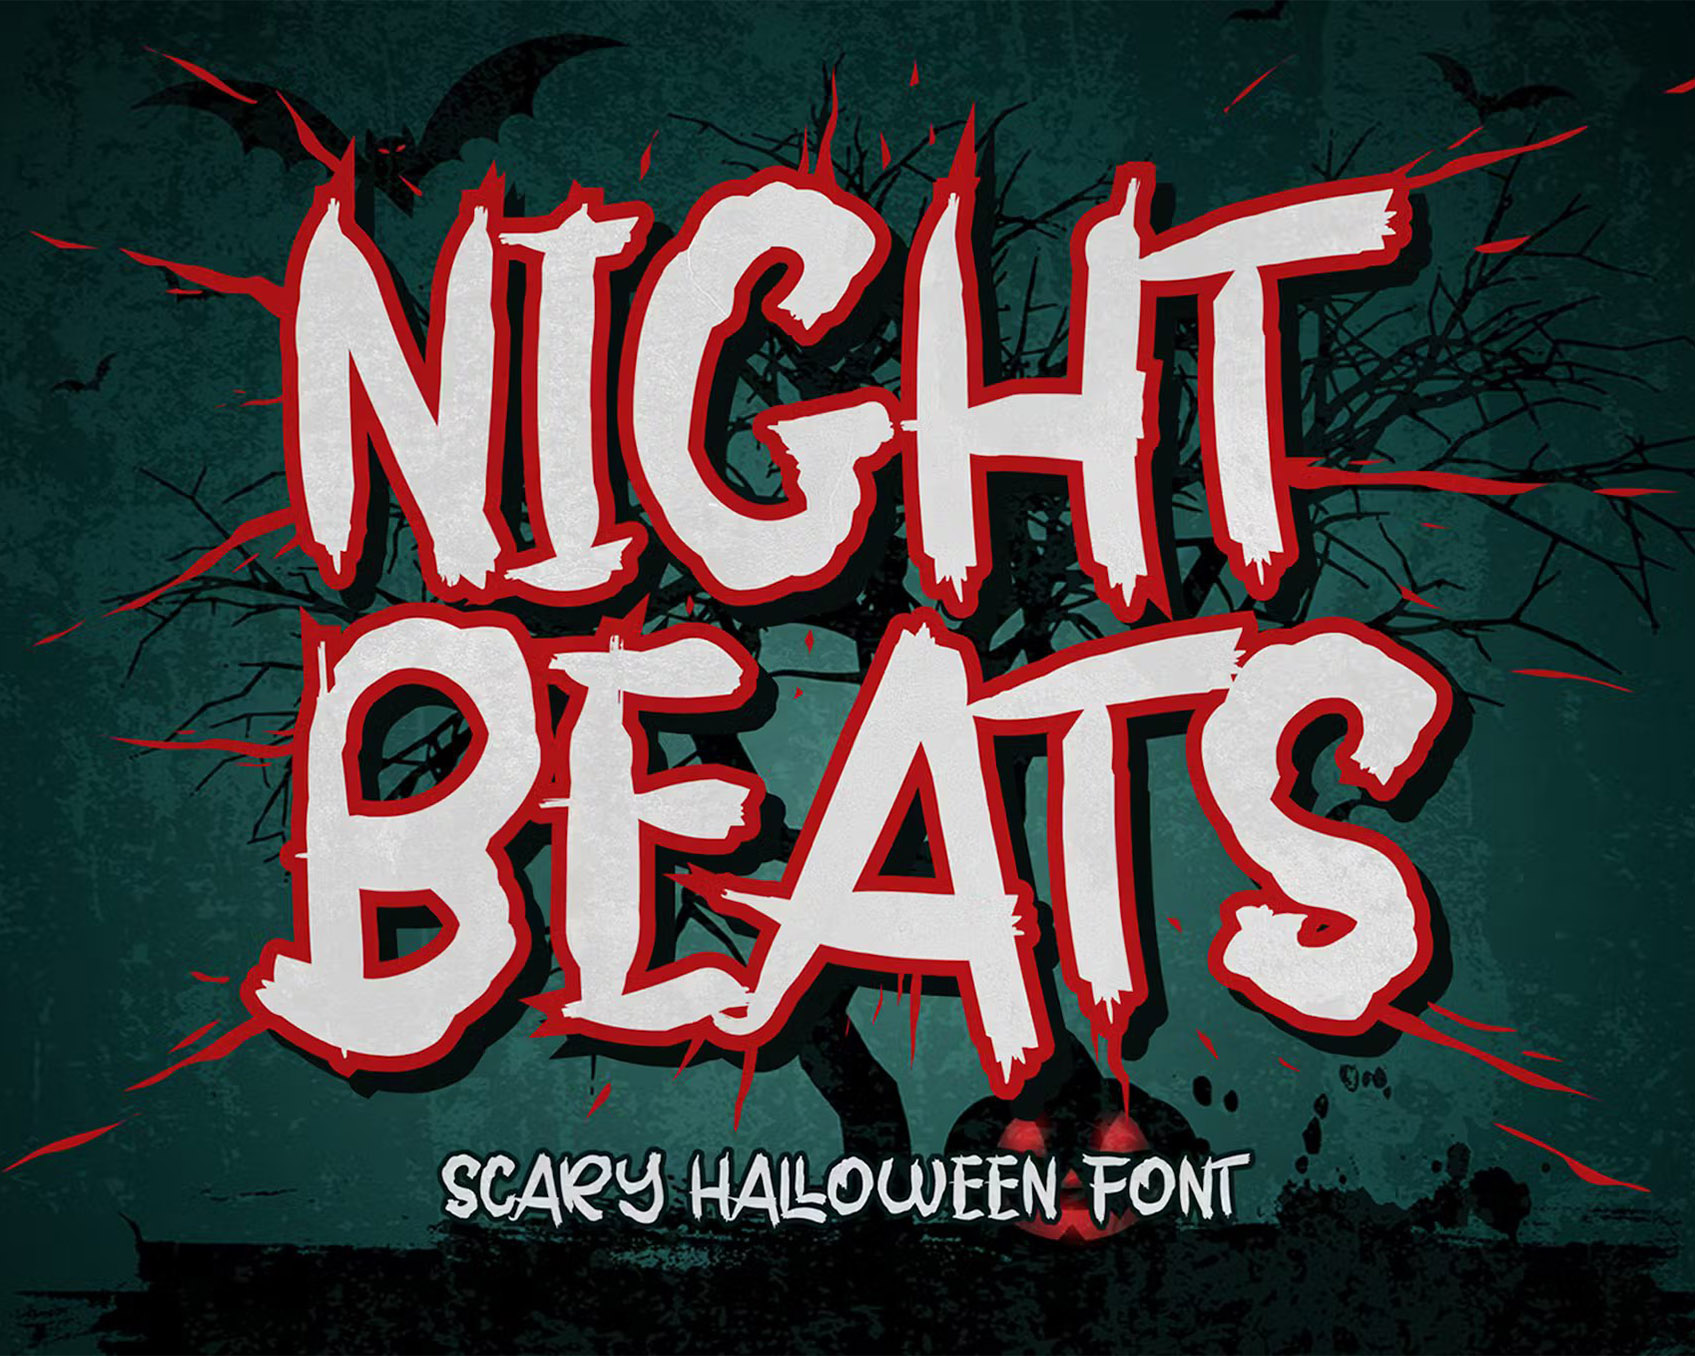 Night Beats - Scary Halloween Font